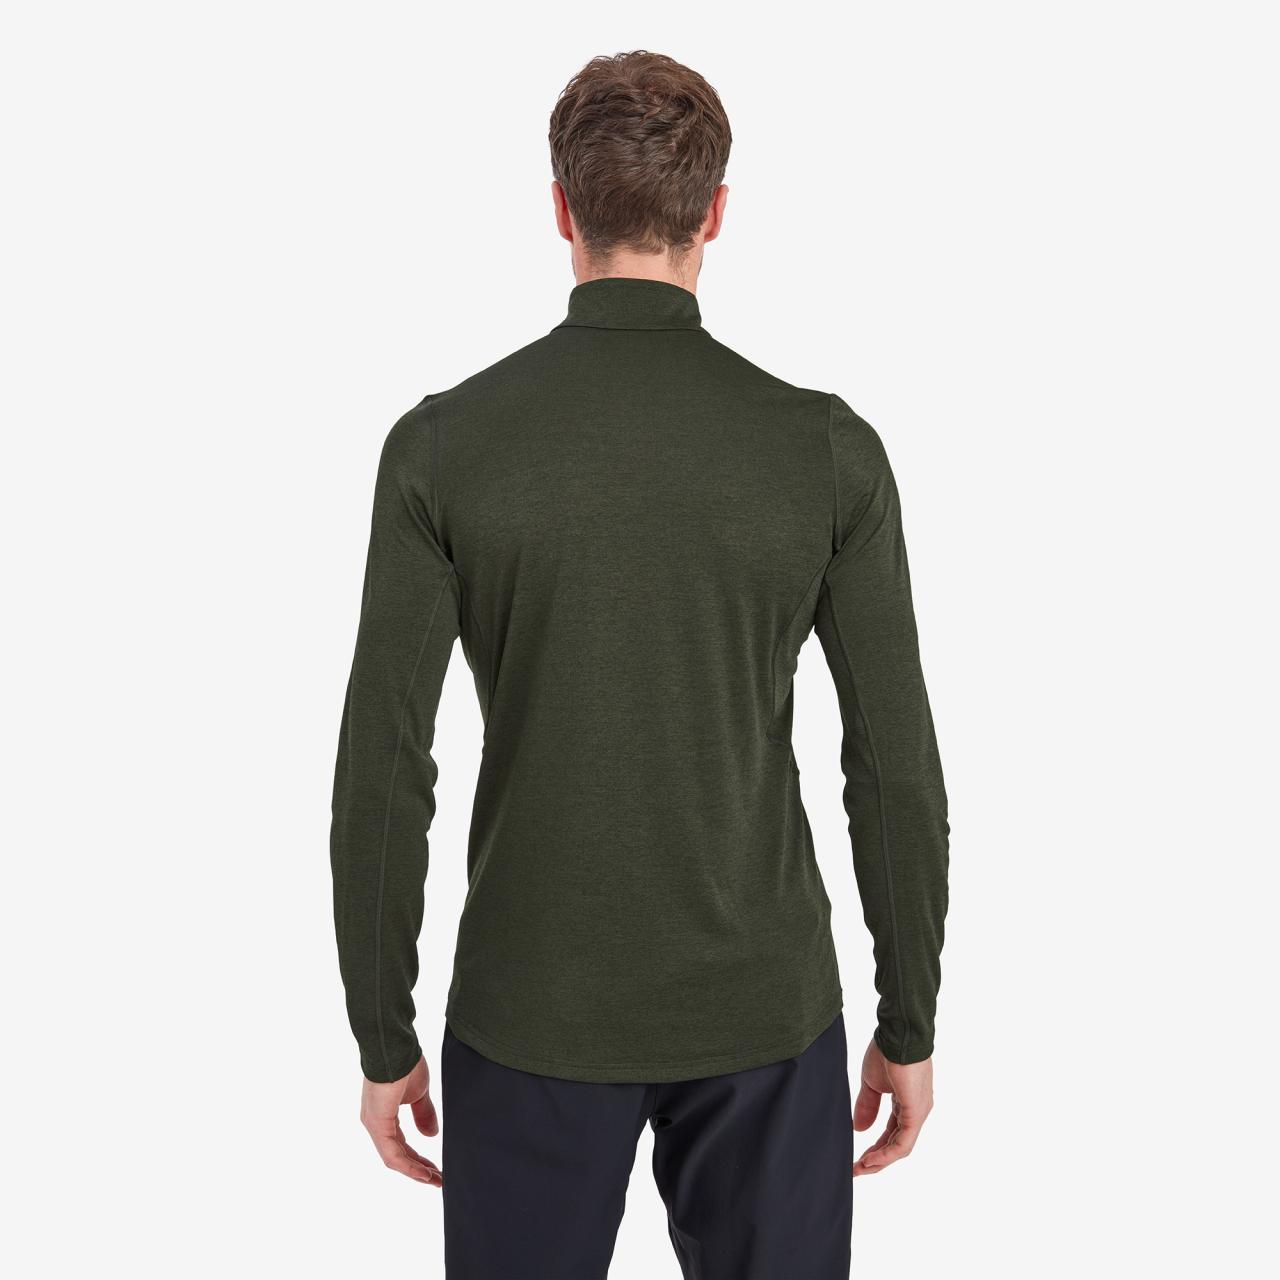 DART ZIP NECK-OAK GREEN-M pánské triko zelené